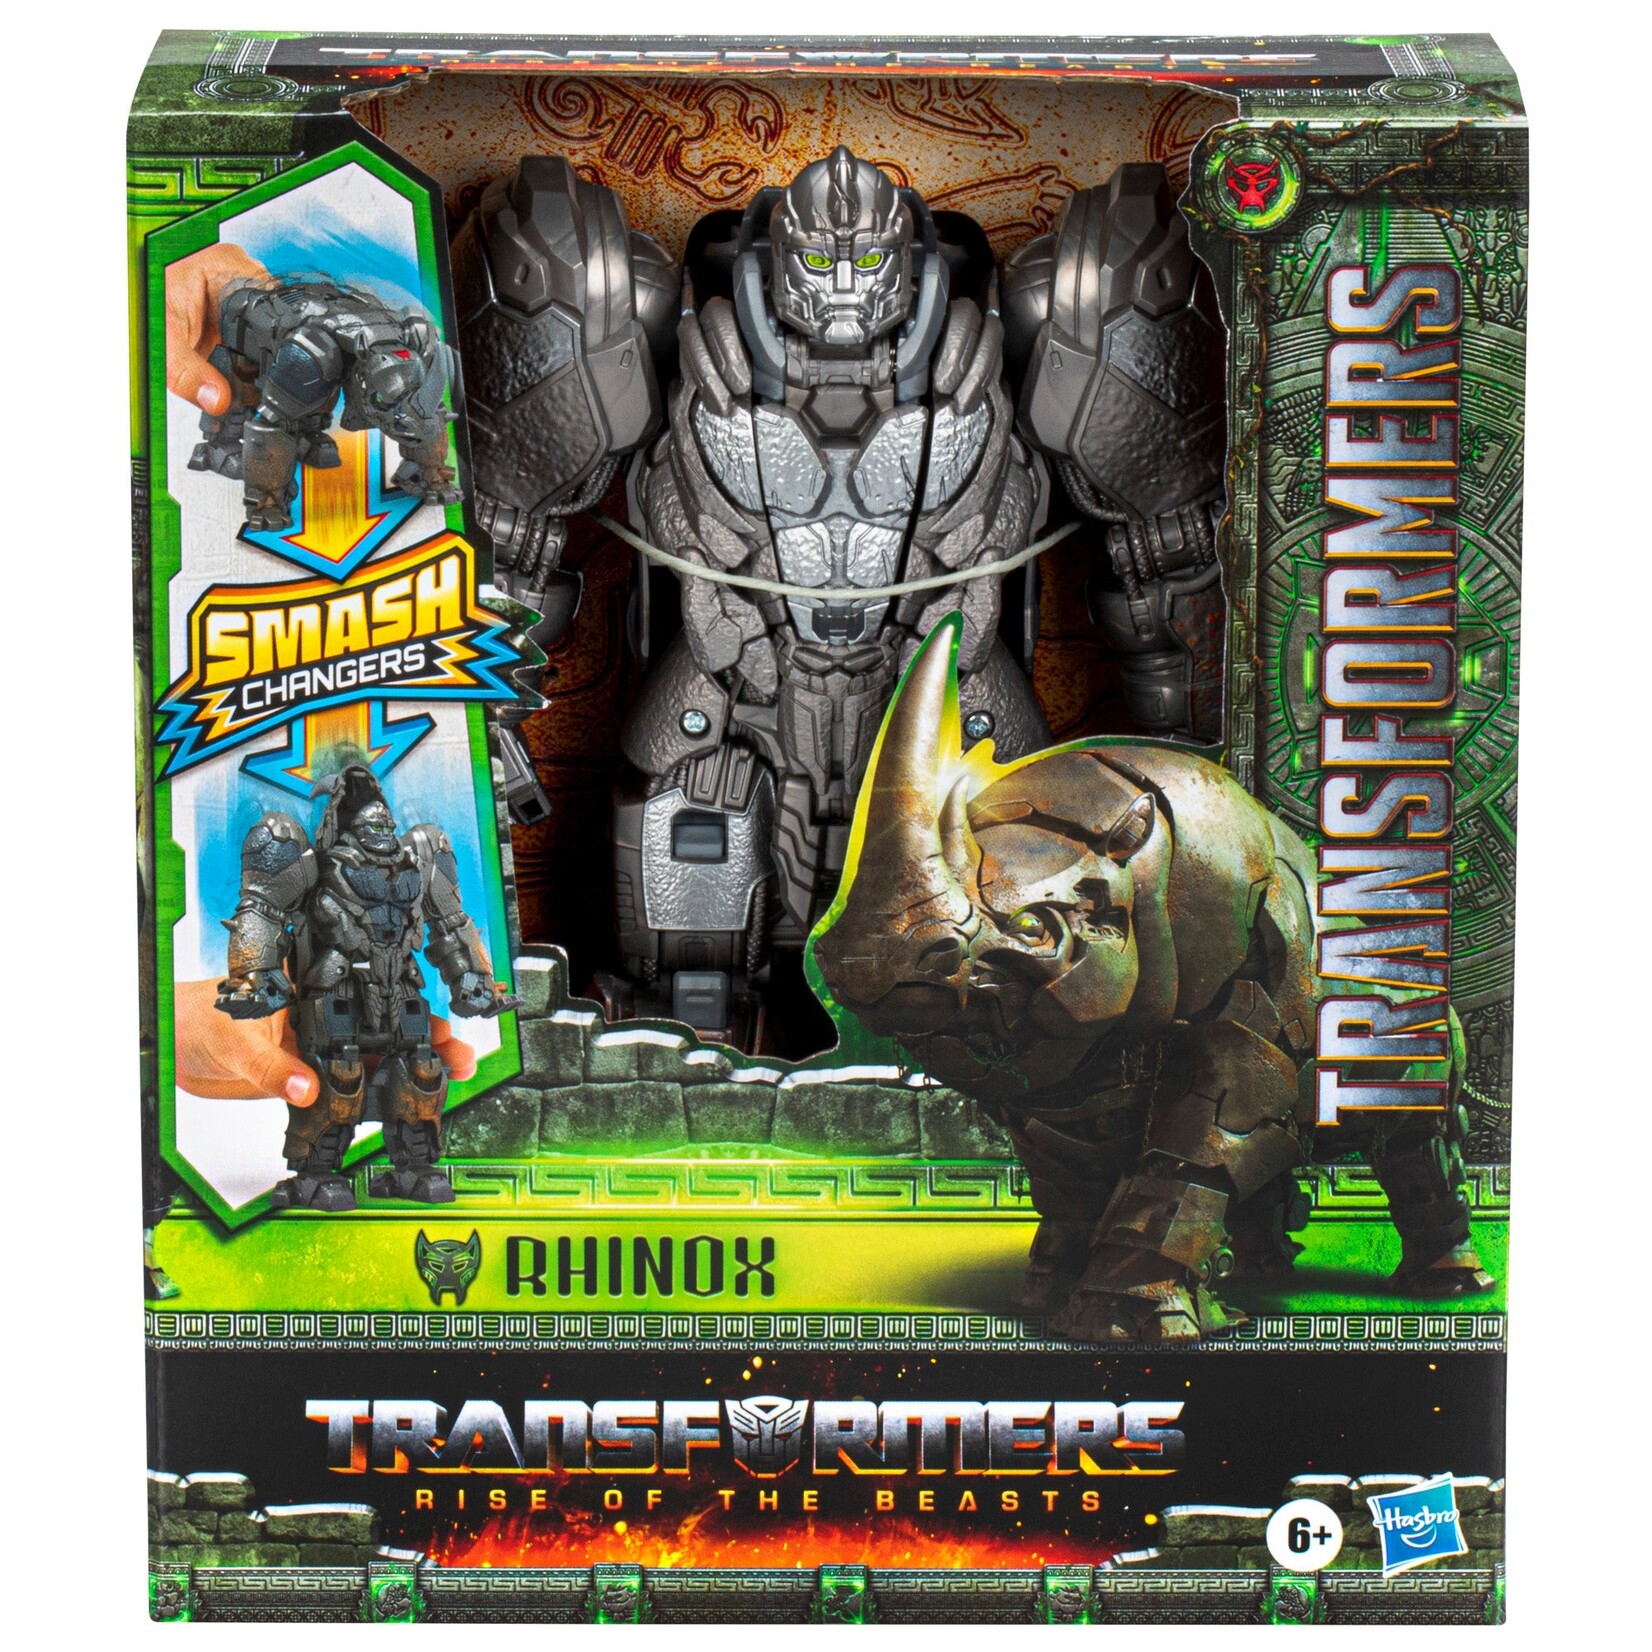 Hasbro Hasbro Transformers Rise of the Beasts Smash Changers Action Figure Rhinox 23 cm